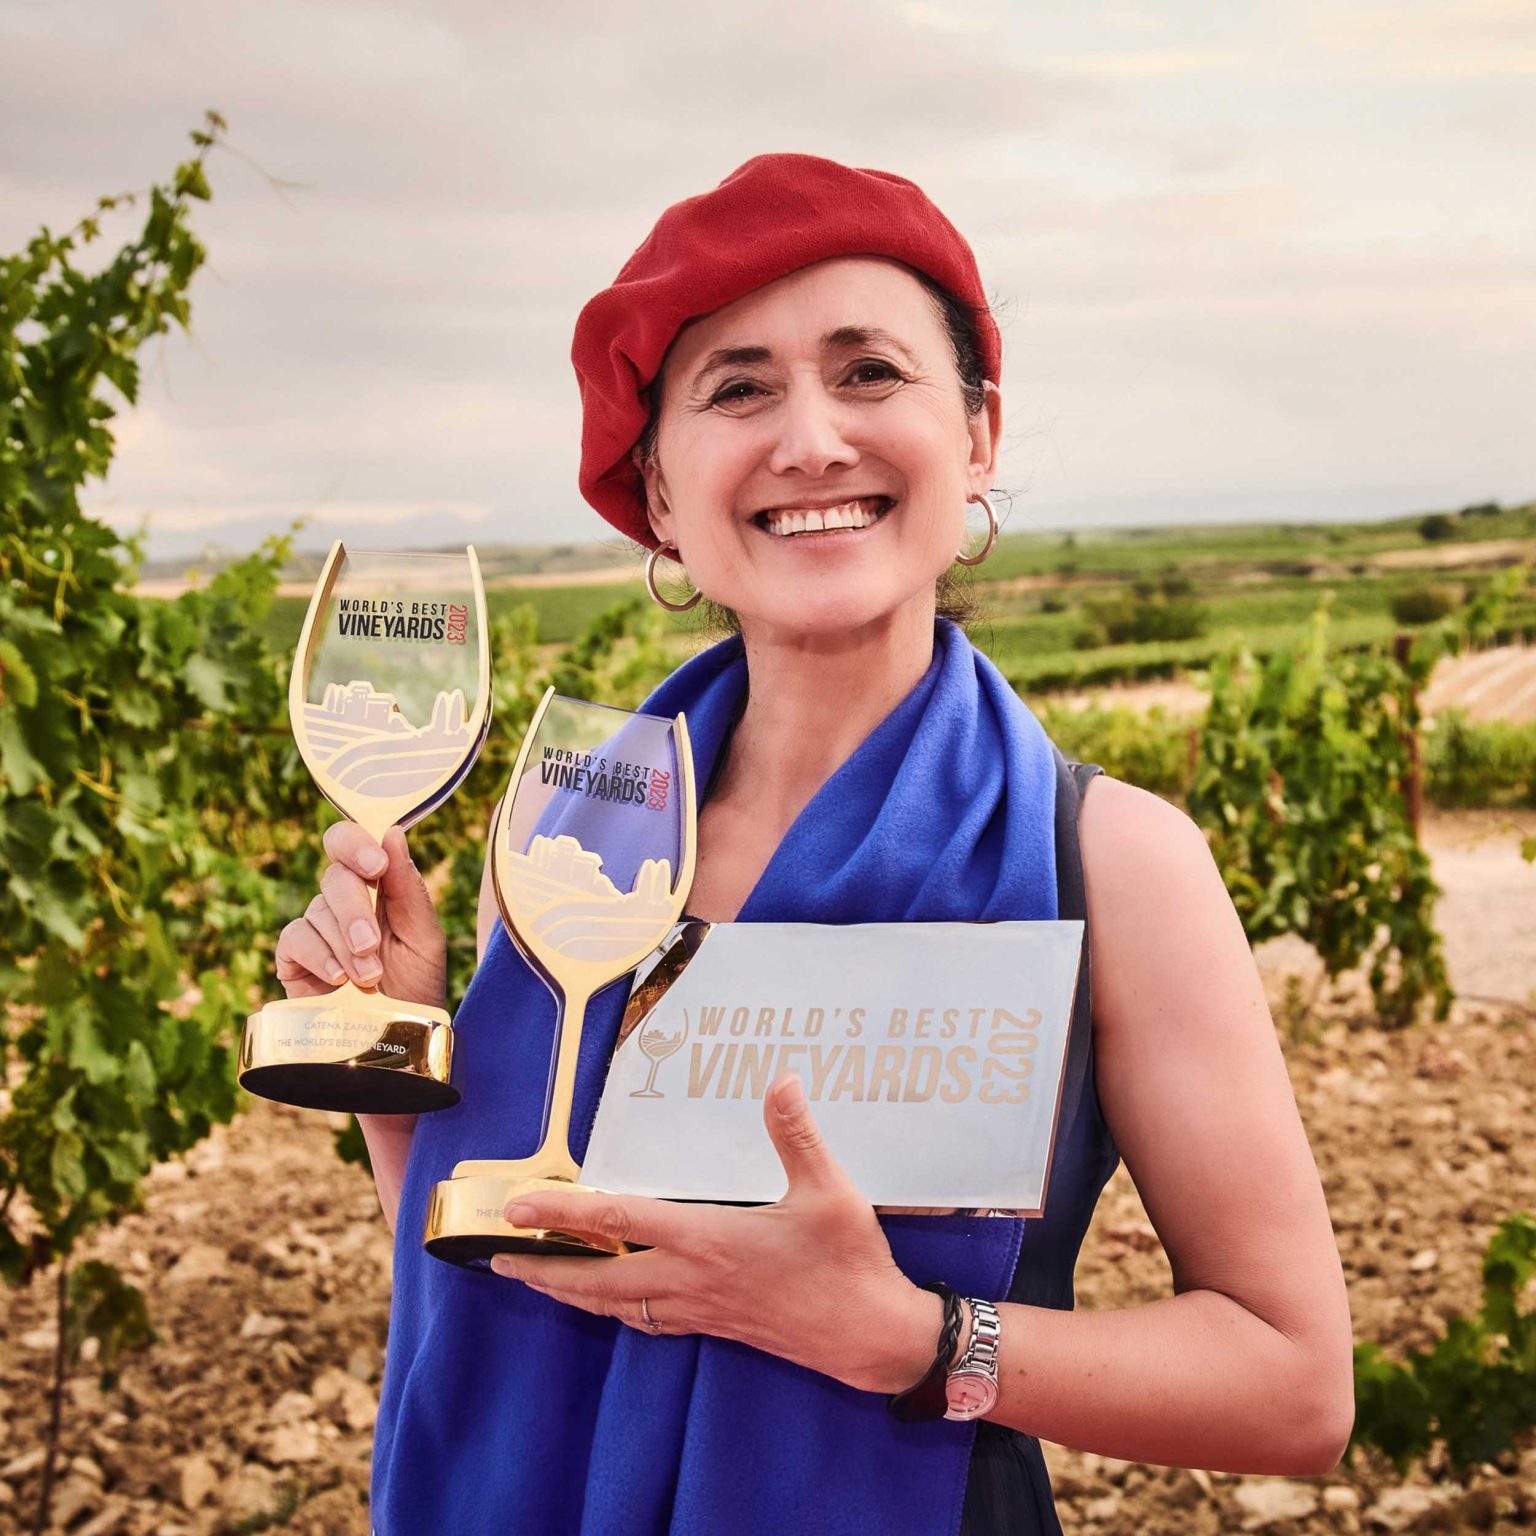 Laura Catena cuarta generacion de viticultores y directora ejecutiva de Catena Zapata